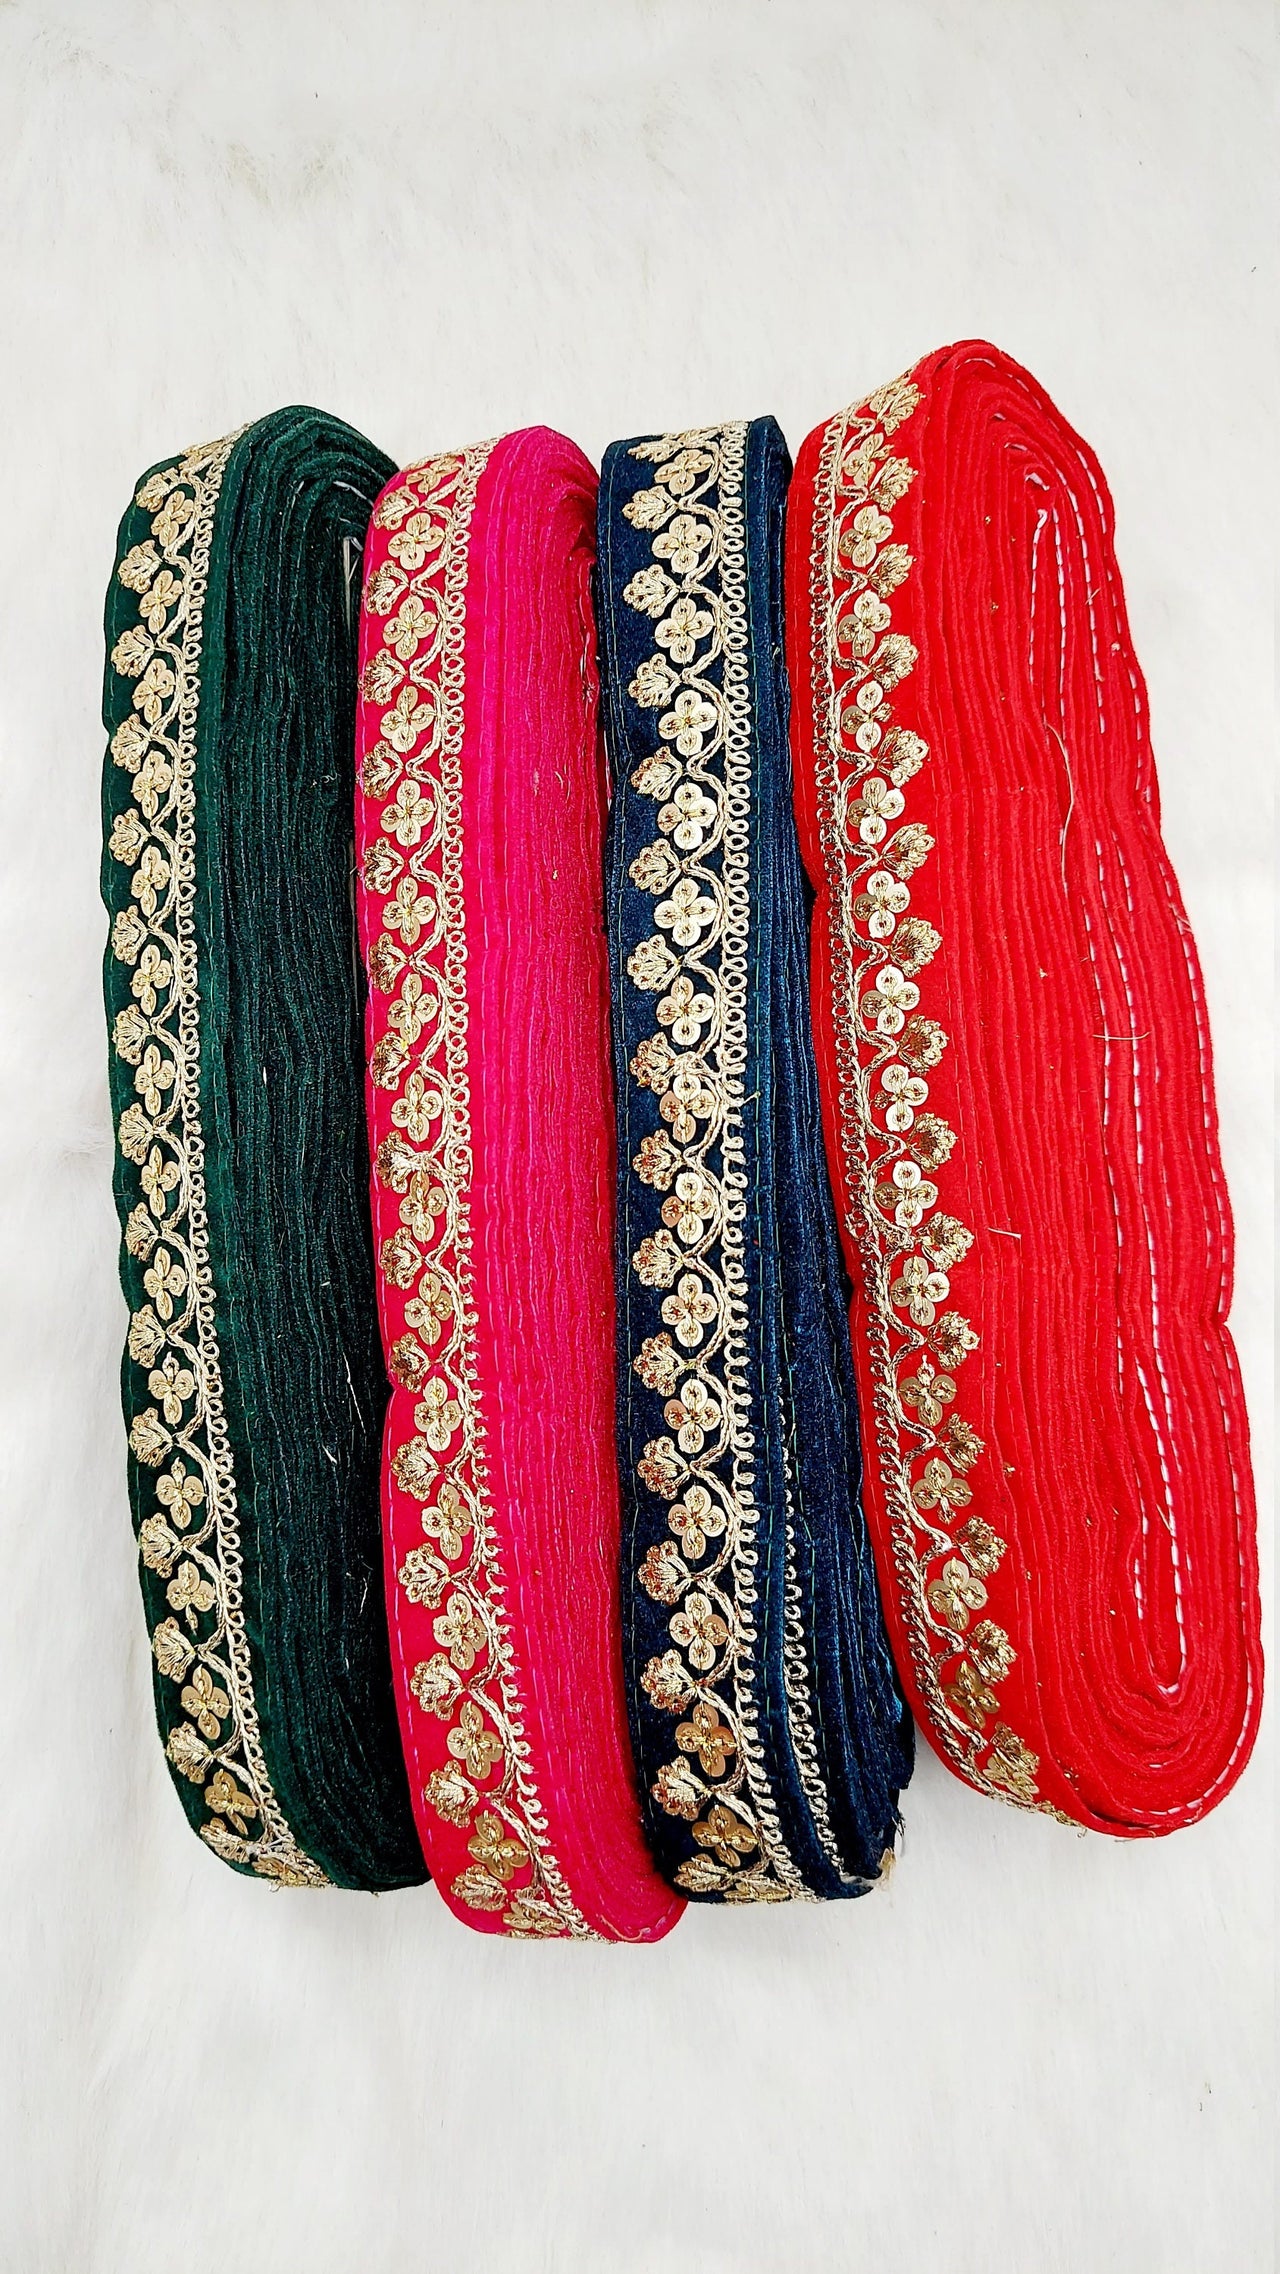 Floral Sequins Embroidered Velvet Fabric Trim Indian Sari Border, Sequin Trimming, Trim By 9 Yards